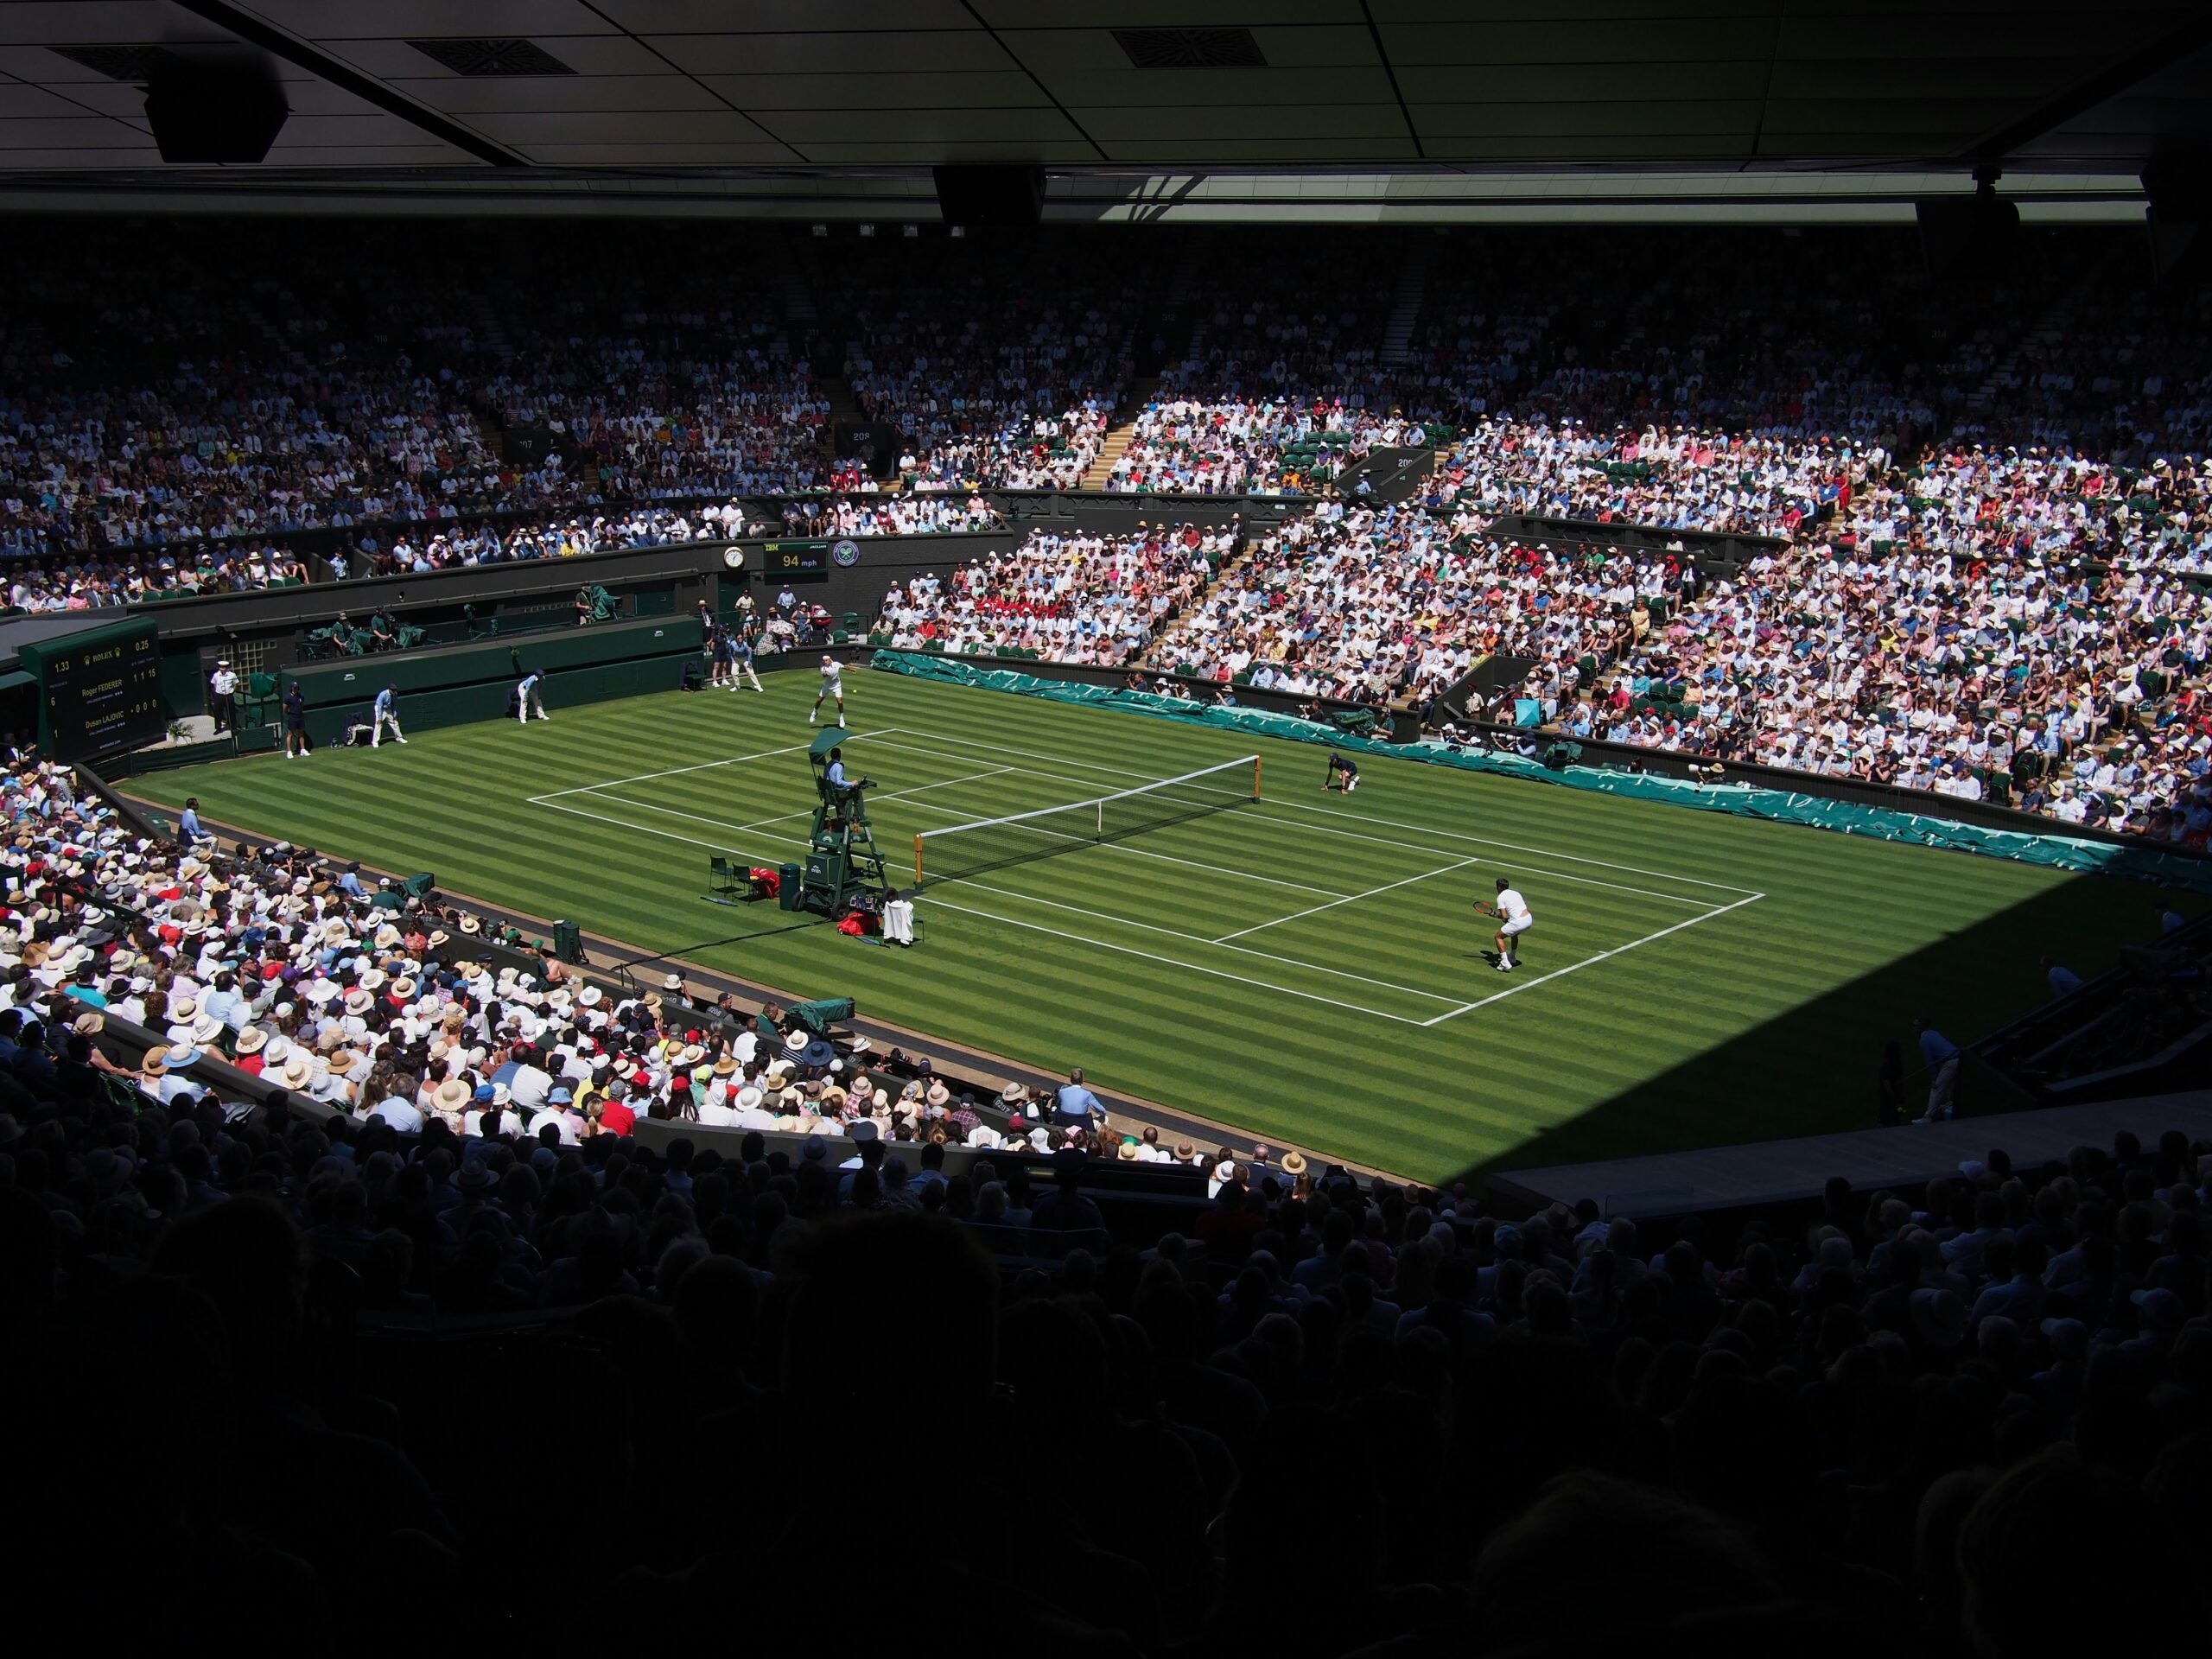 A spectator view of a professional tennis match in progress.